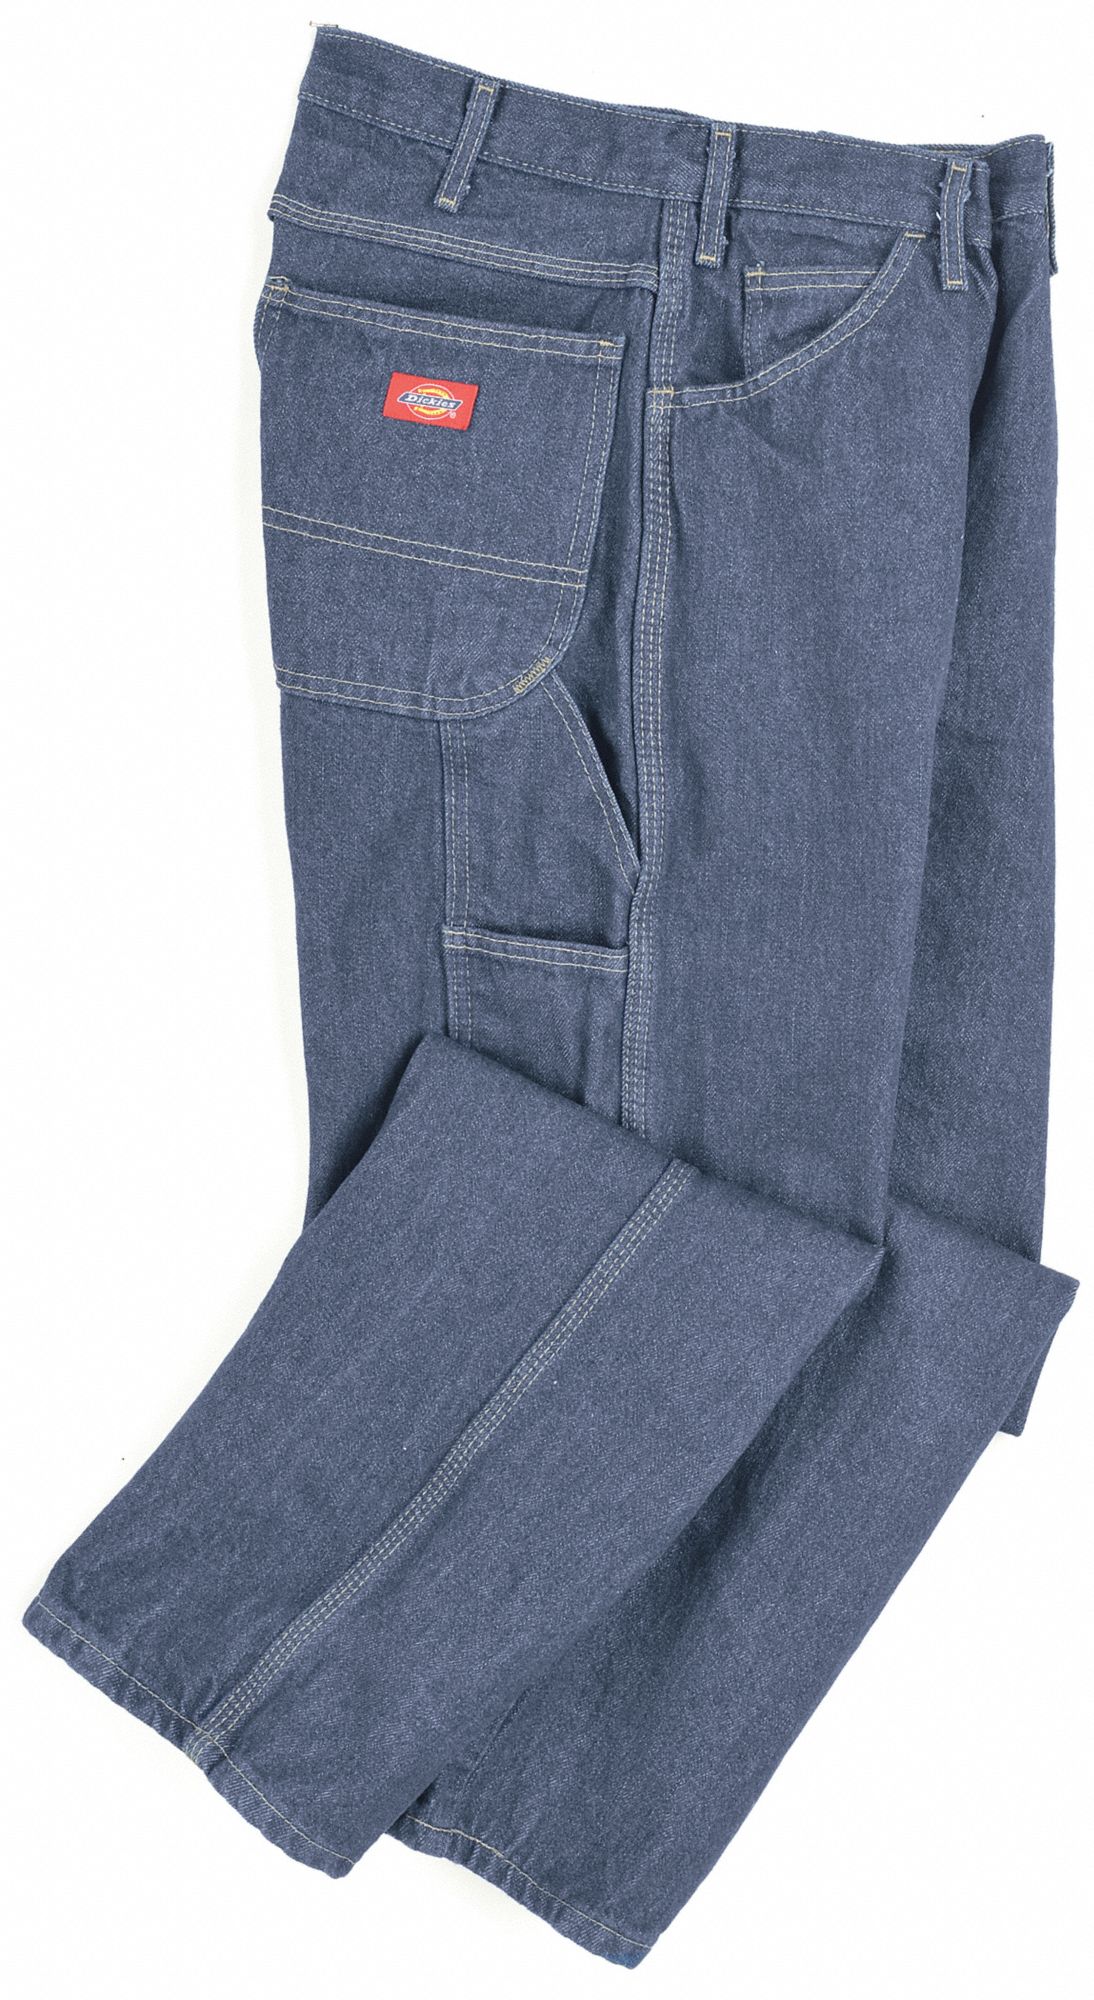 grey carpenter pants